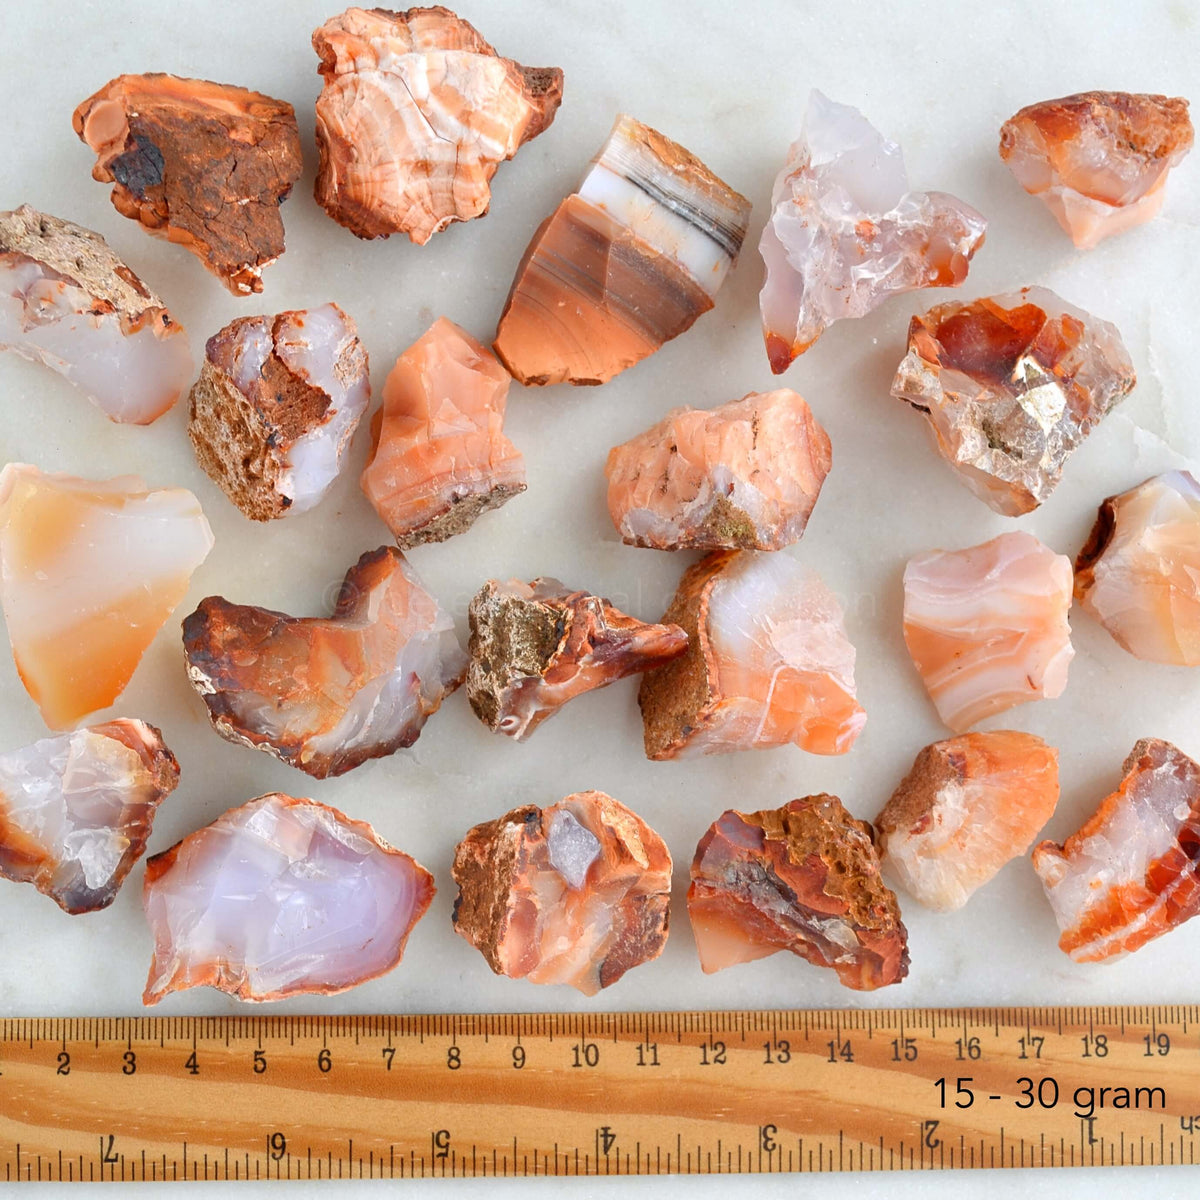 raw carnelian crystals 15 to 30 gram size